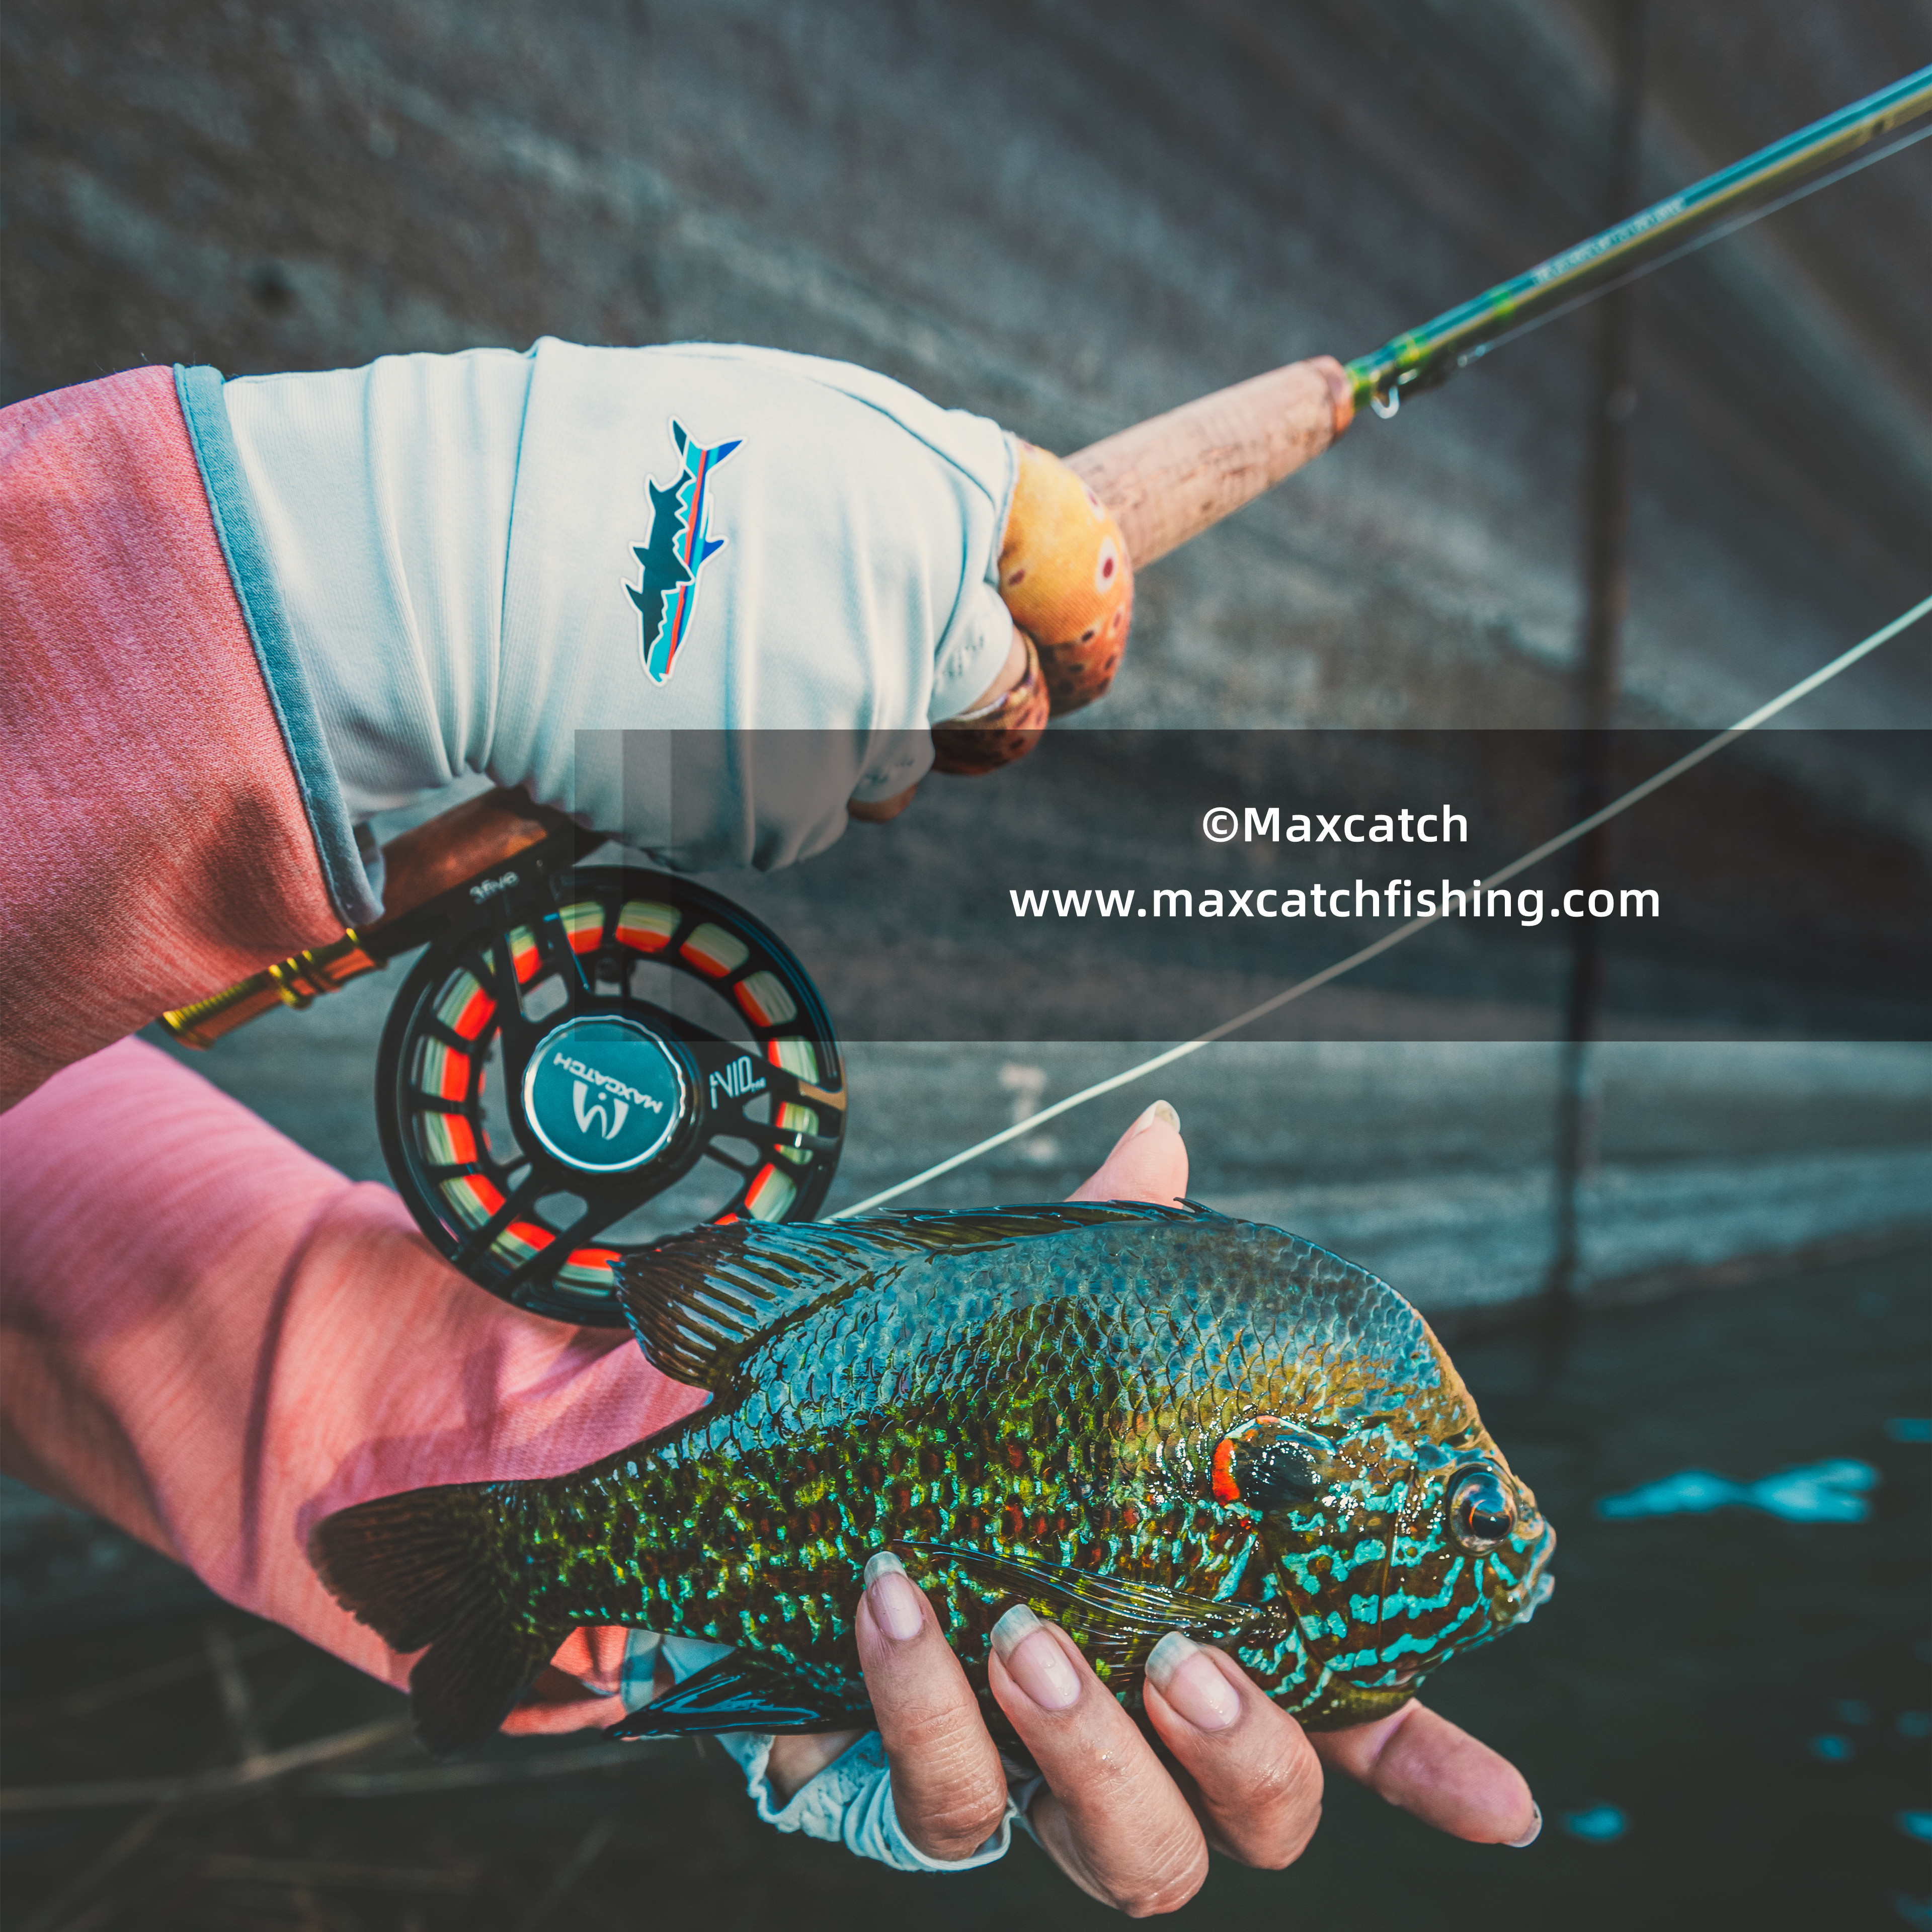 maxcatchfishing Enhance Fly Fishing Experience Since 2005